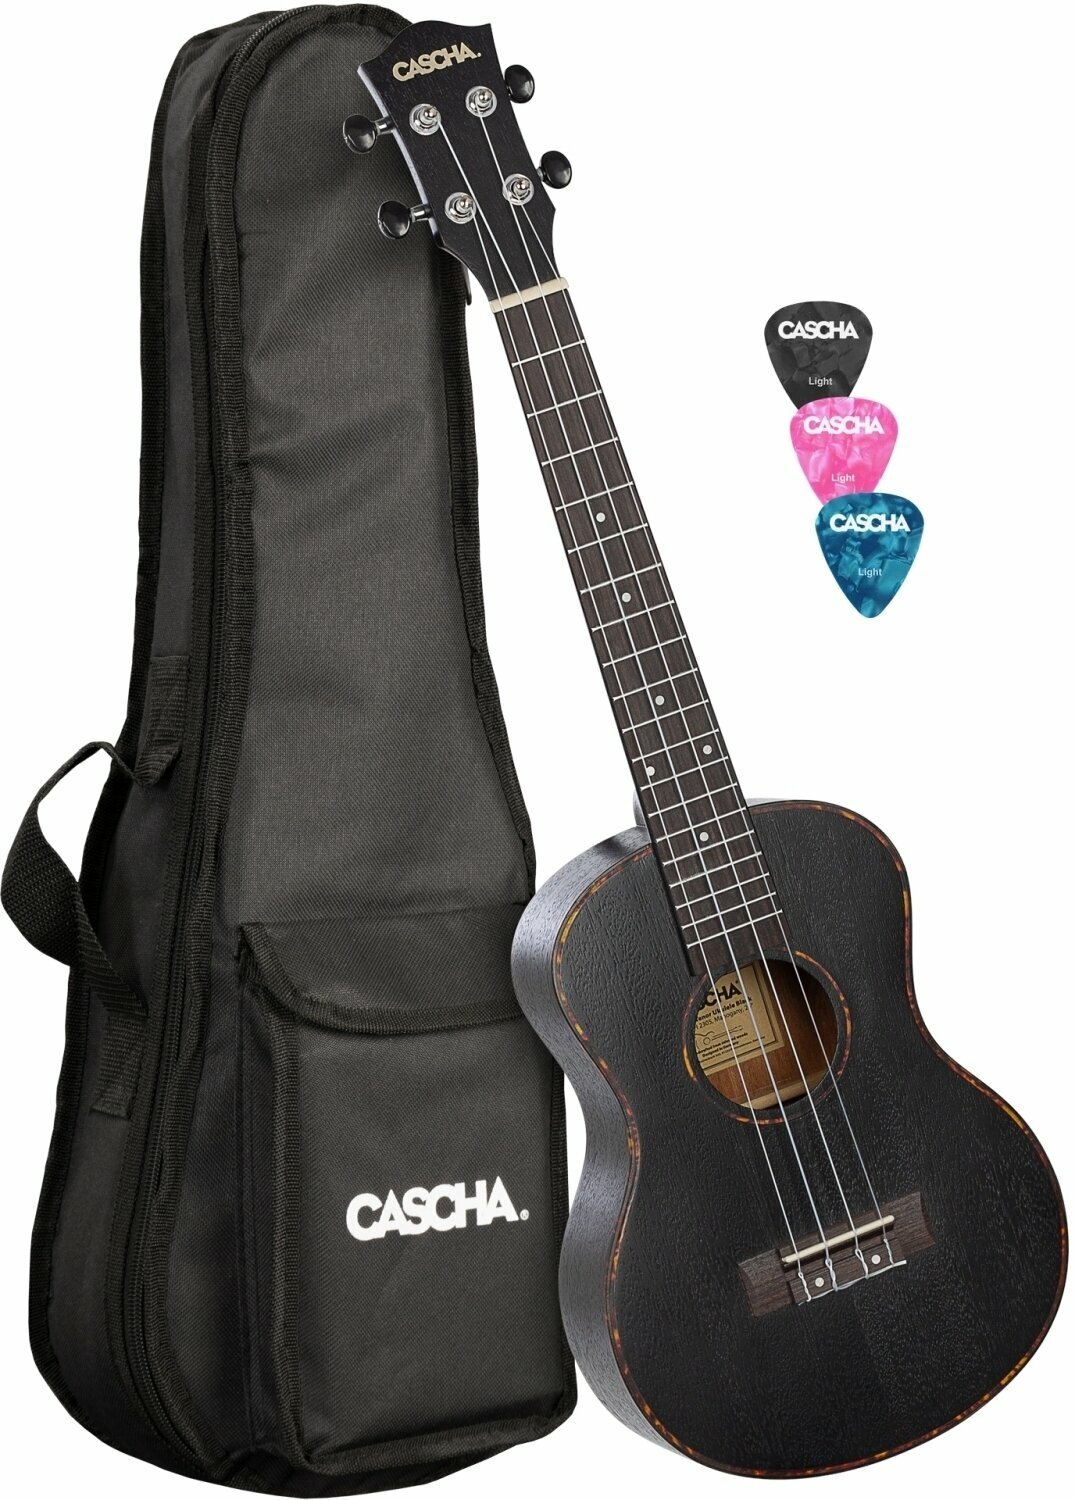 Tenor ukulele Cascha HH 2305L Tenor ukulele Black